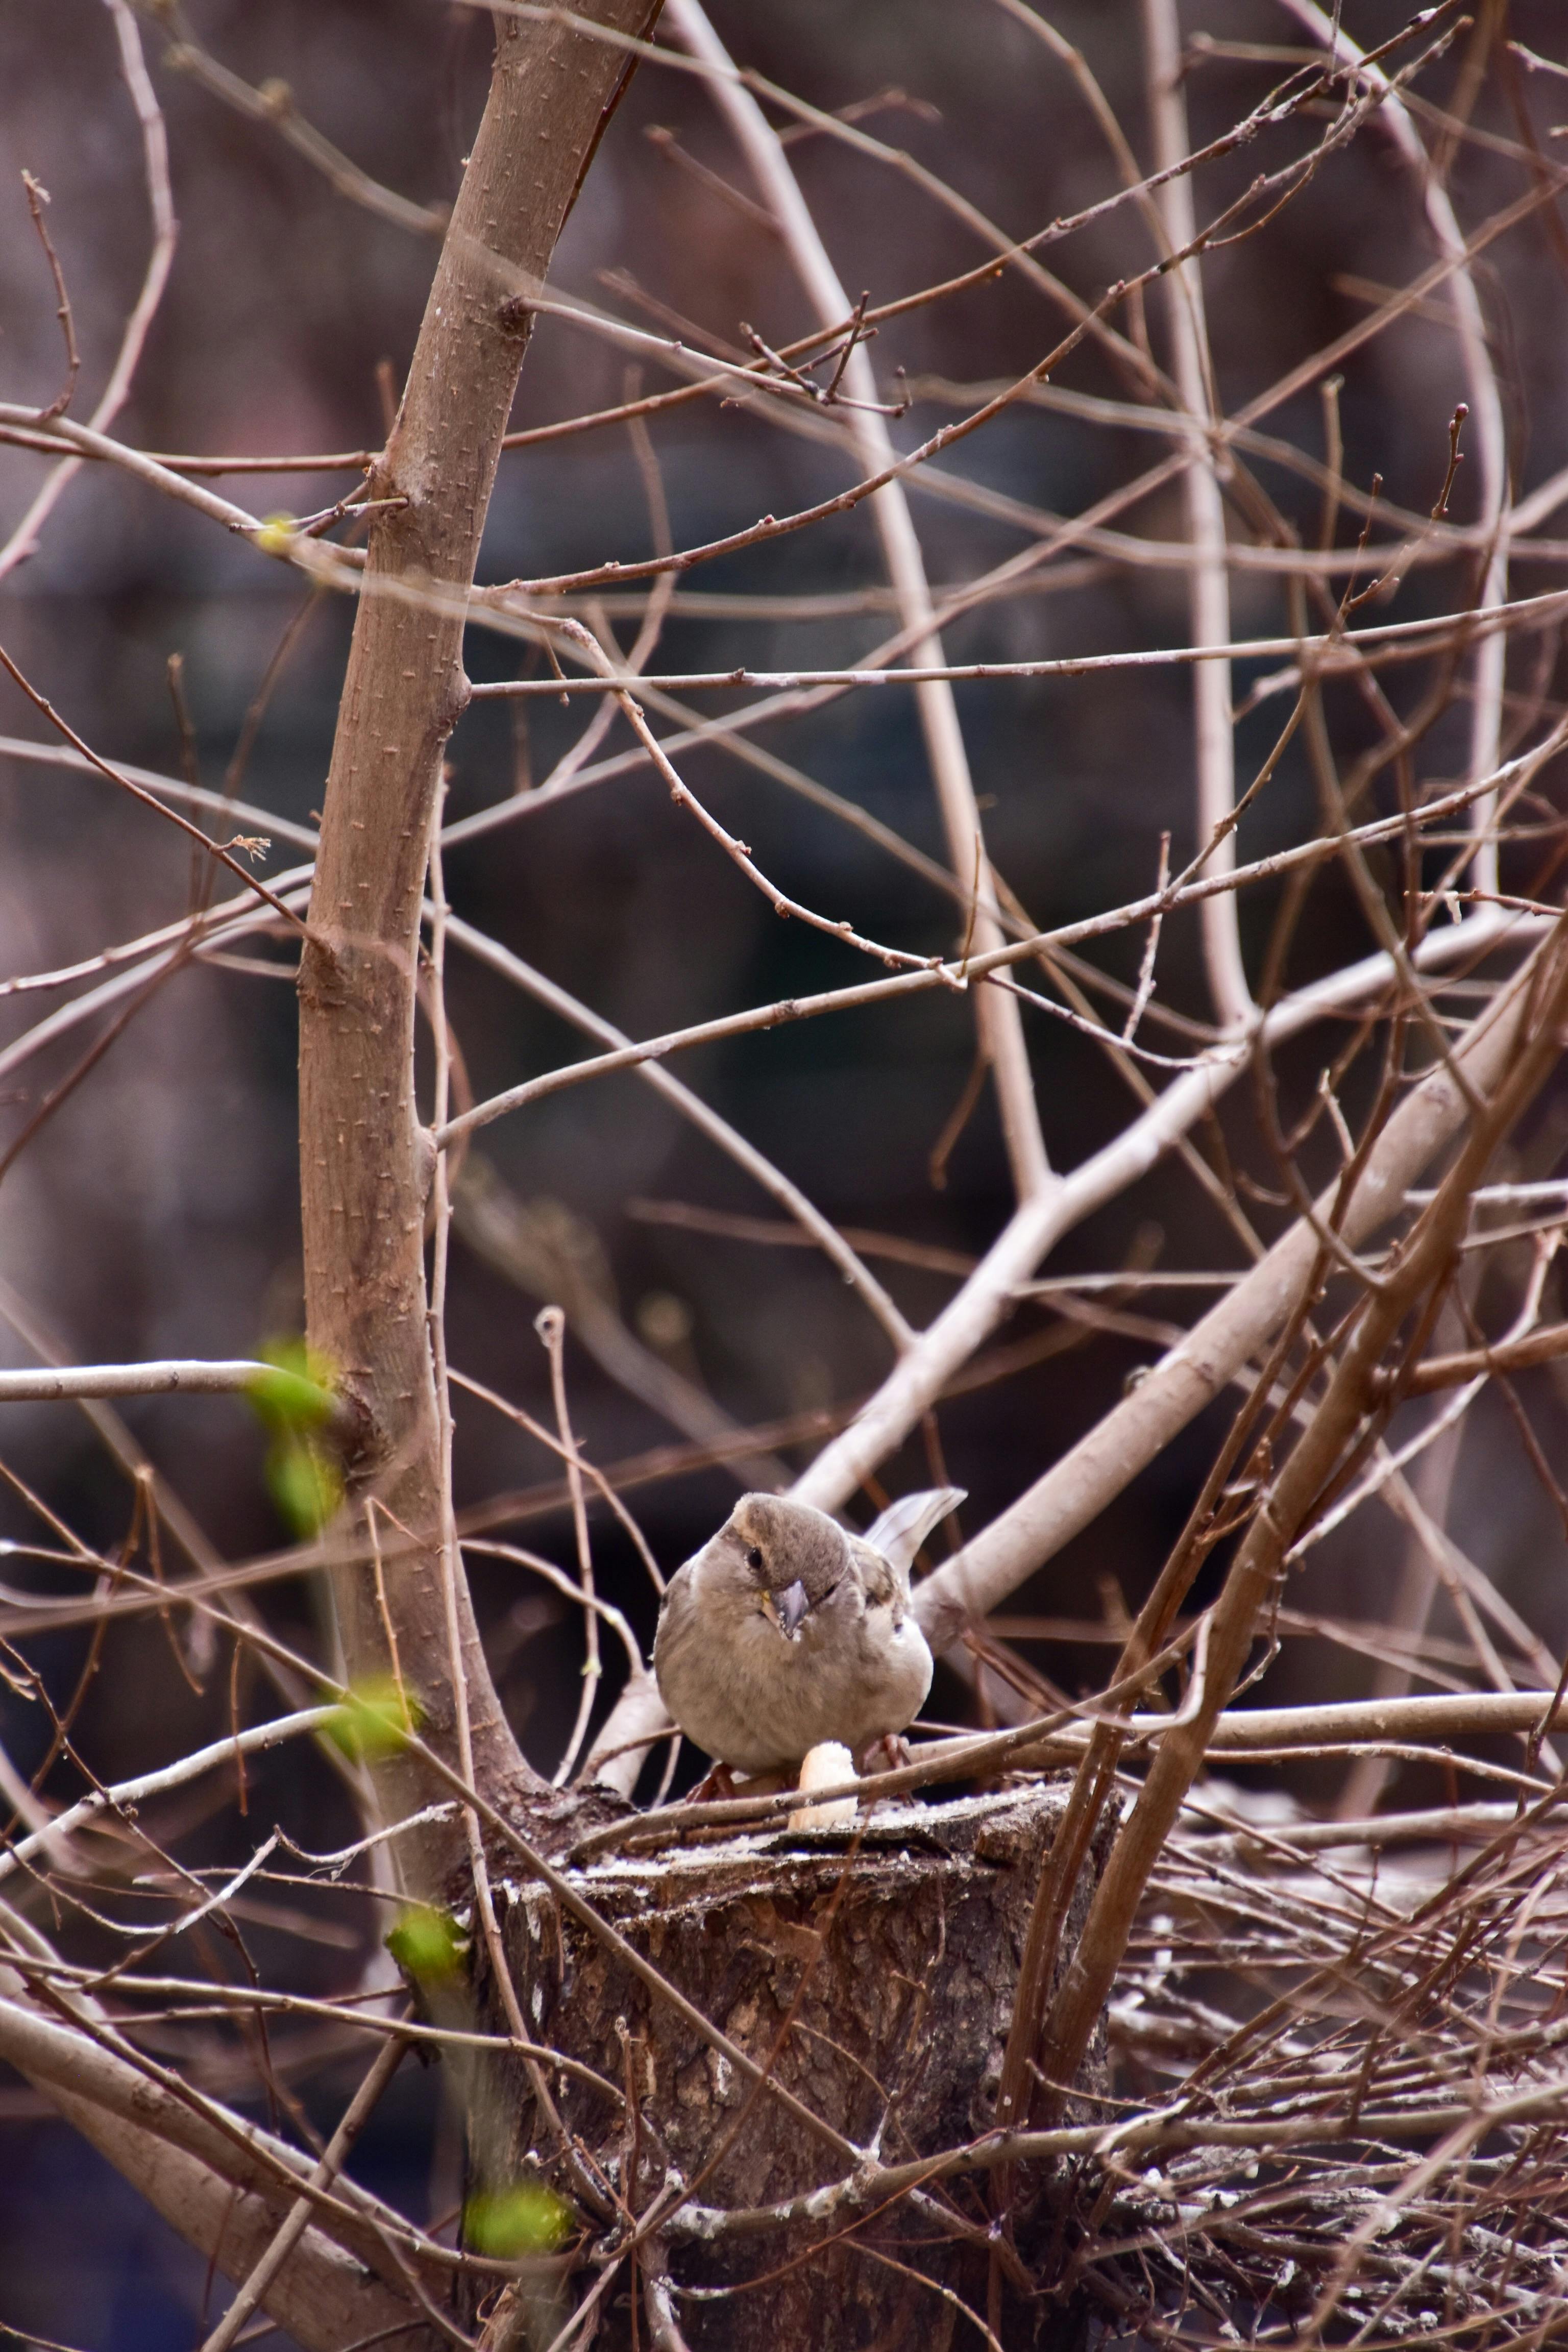 Deterring Birds from Building Nests: